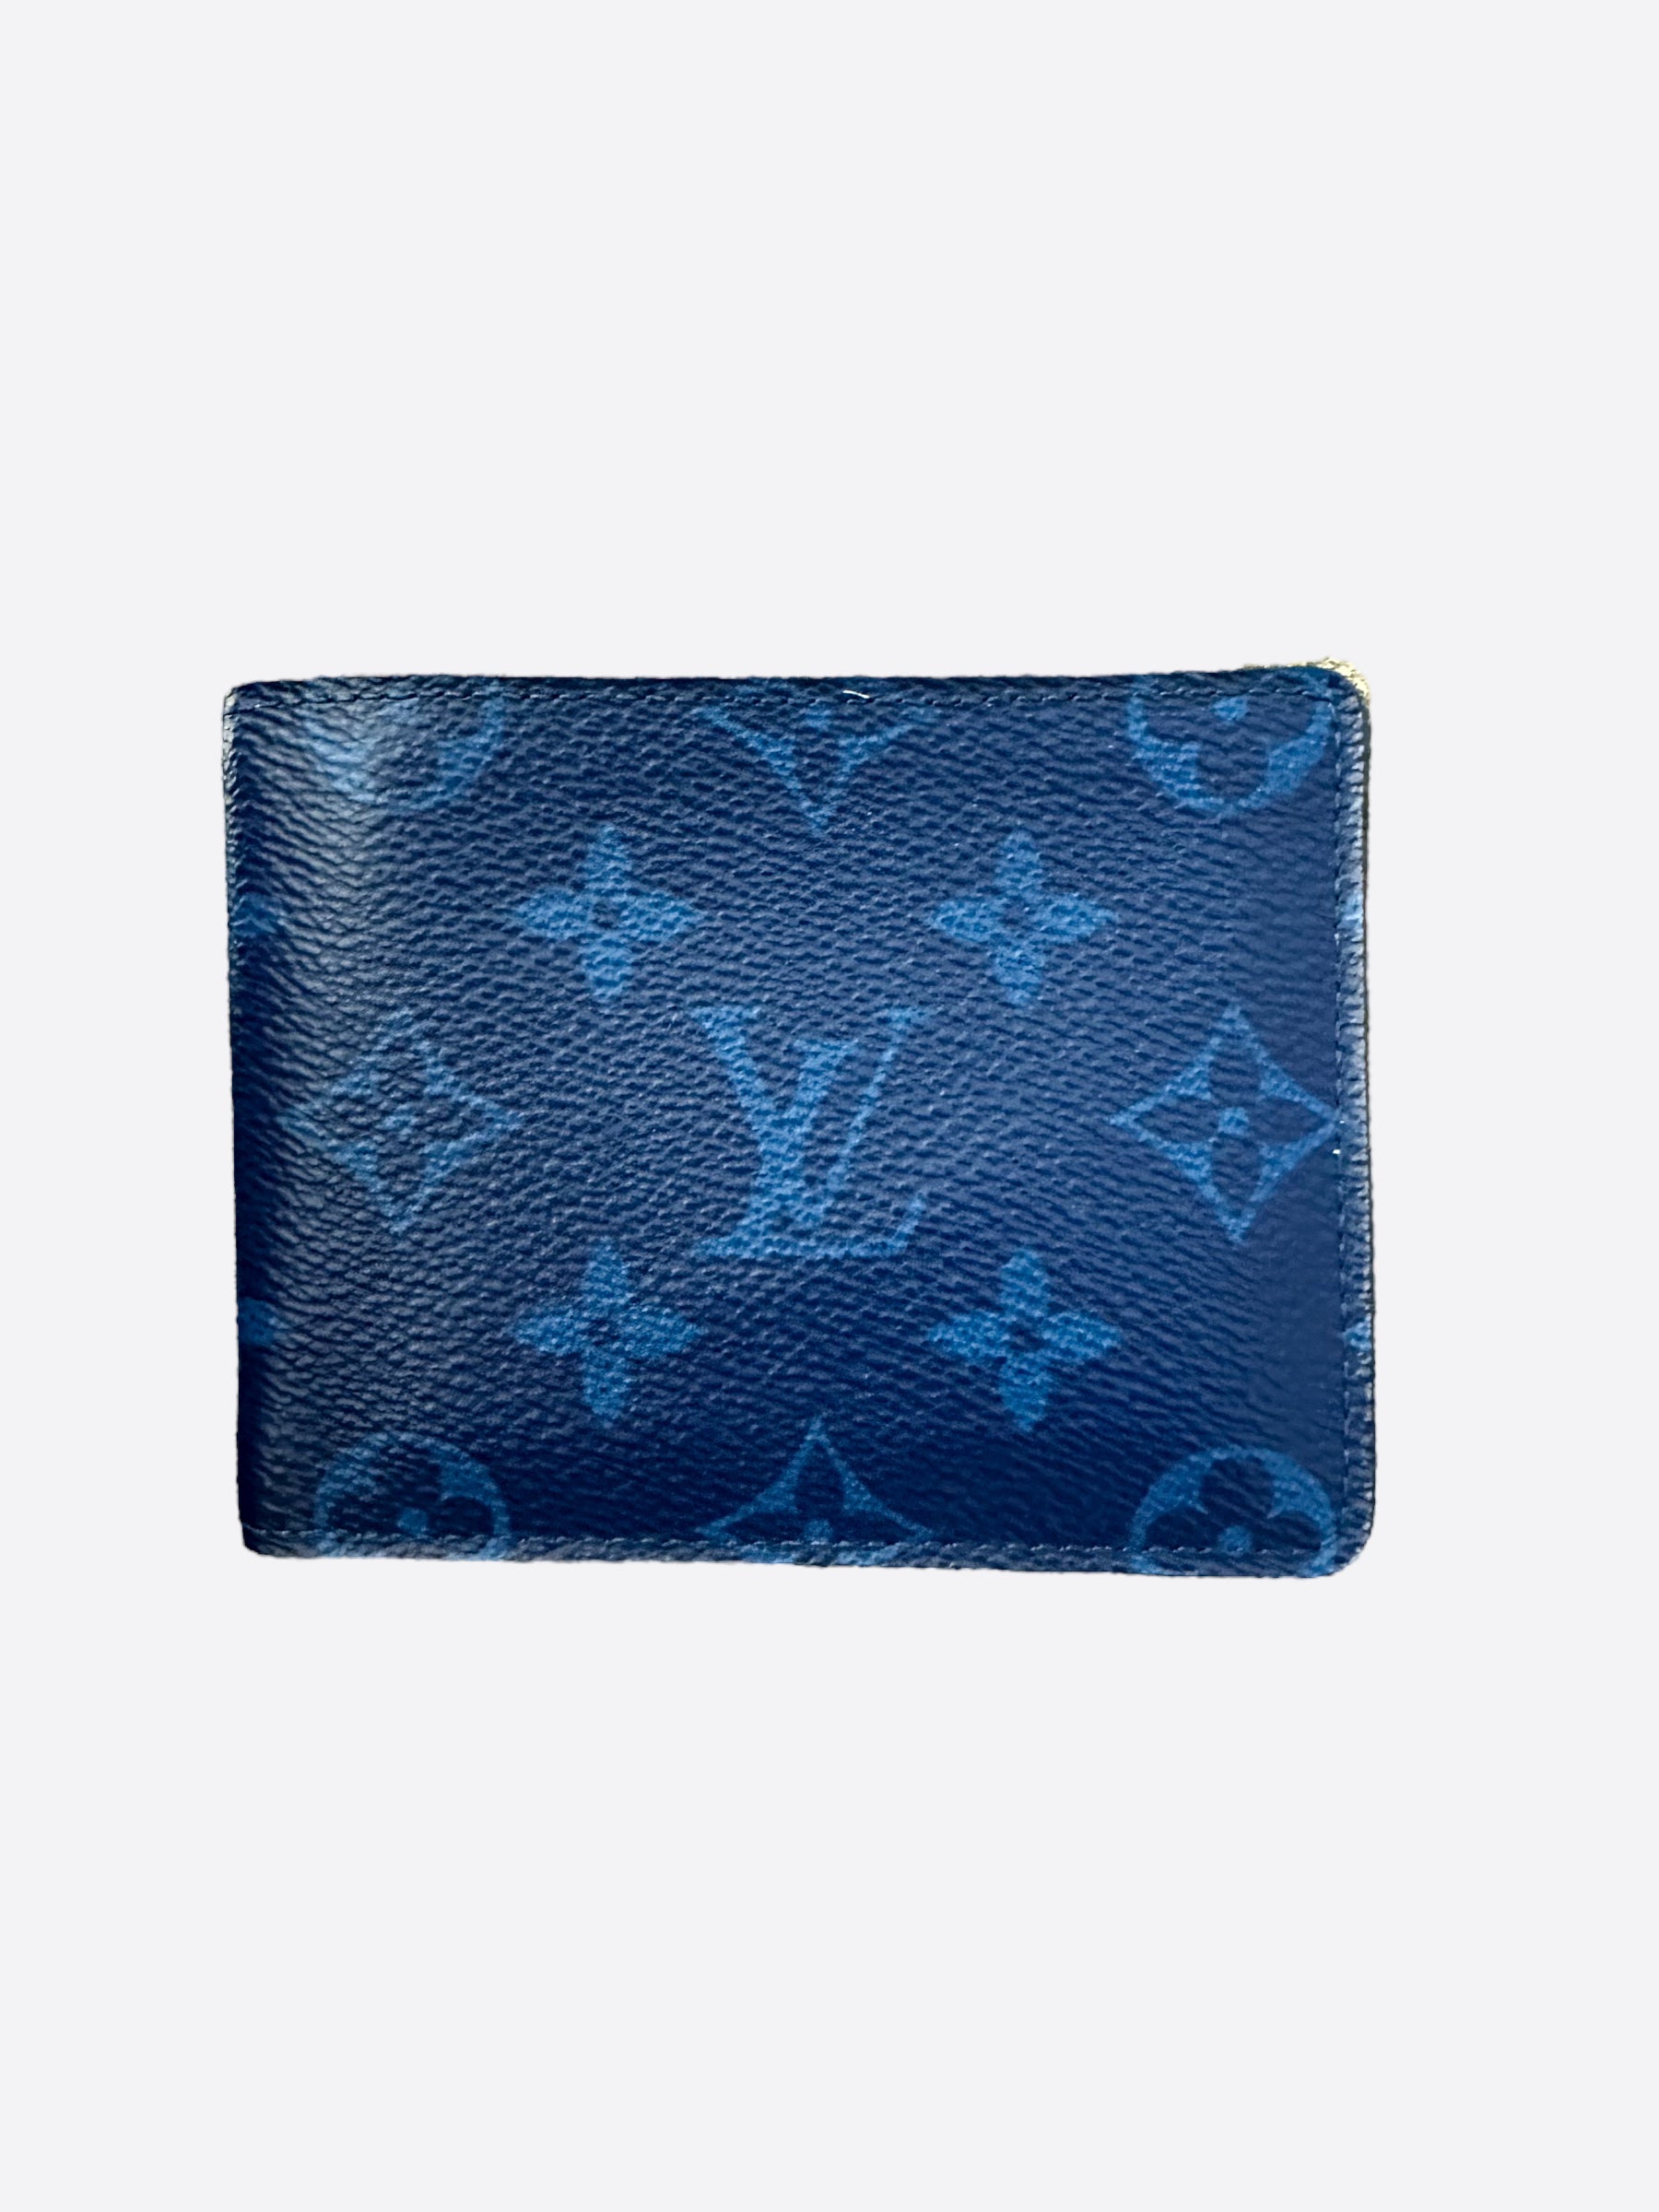 lv blue monogram wallet